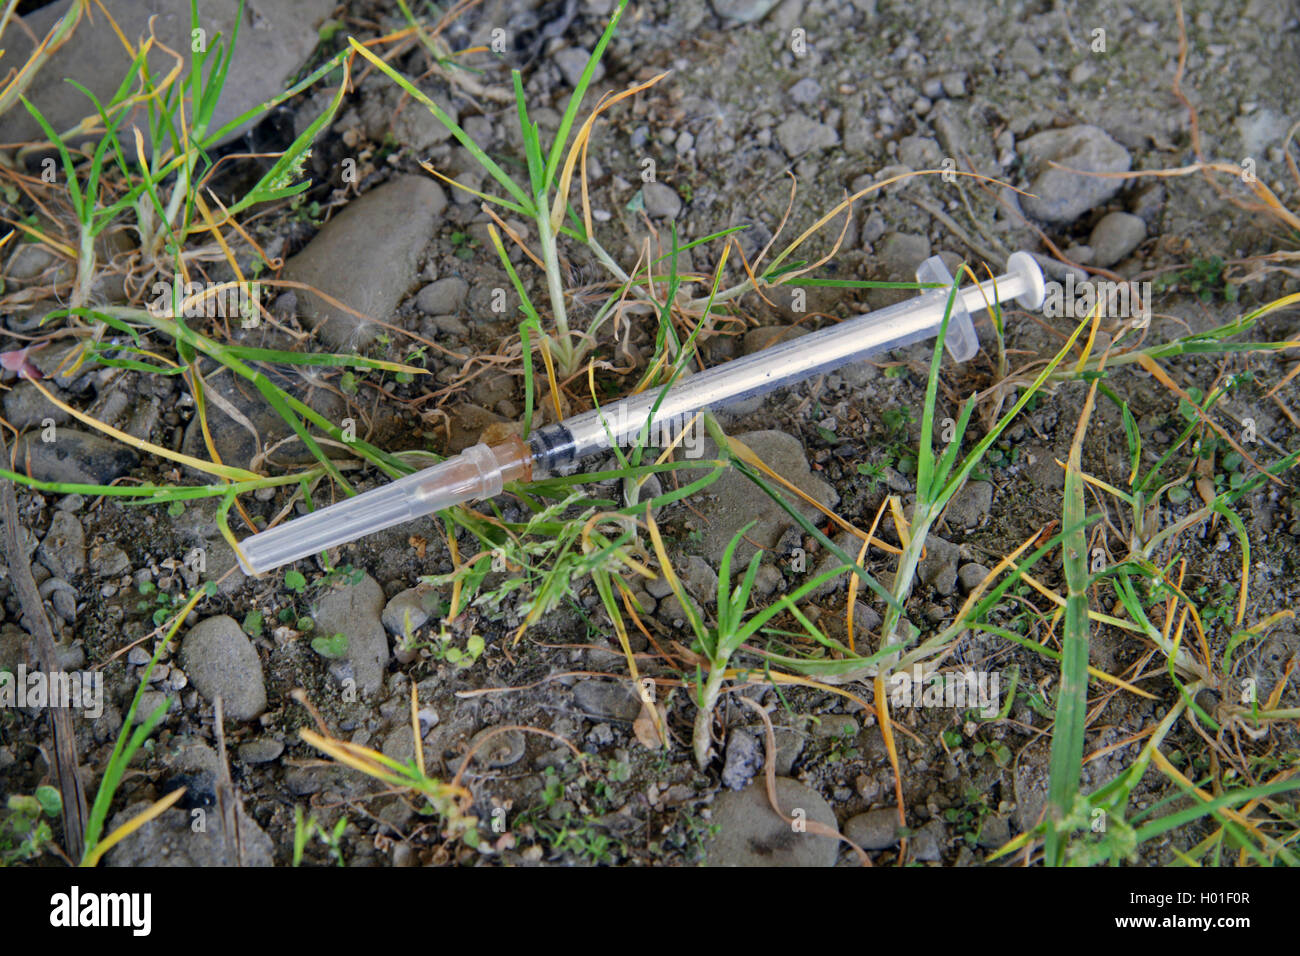 heroin syringe on the ground, Germany Stock Photo